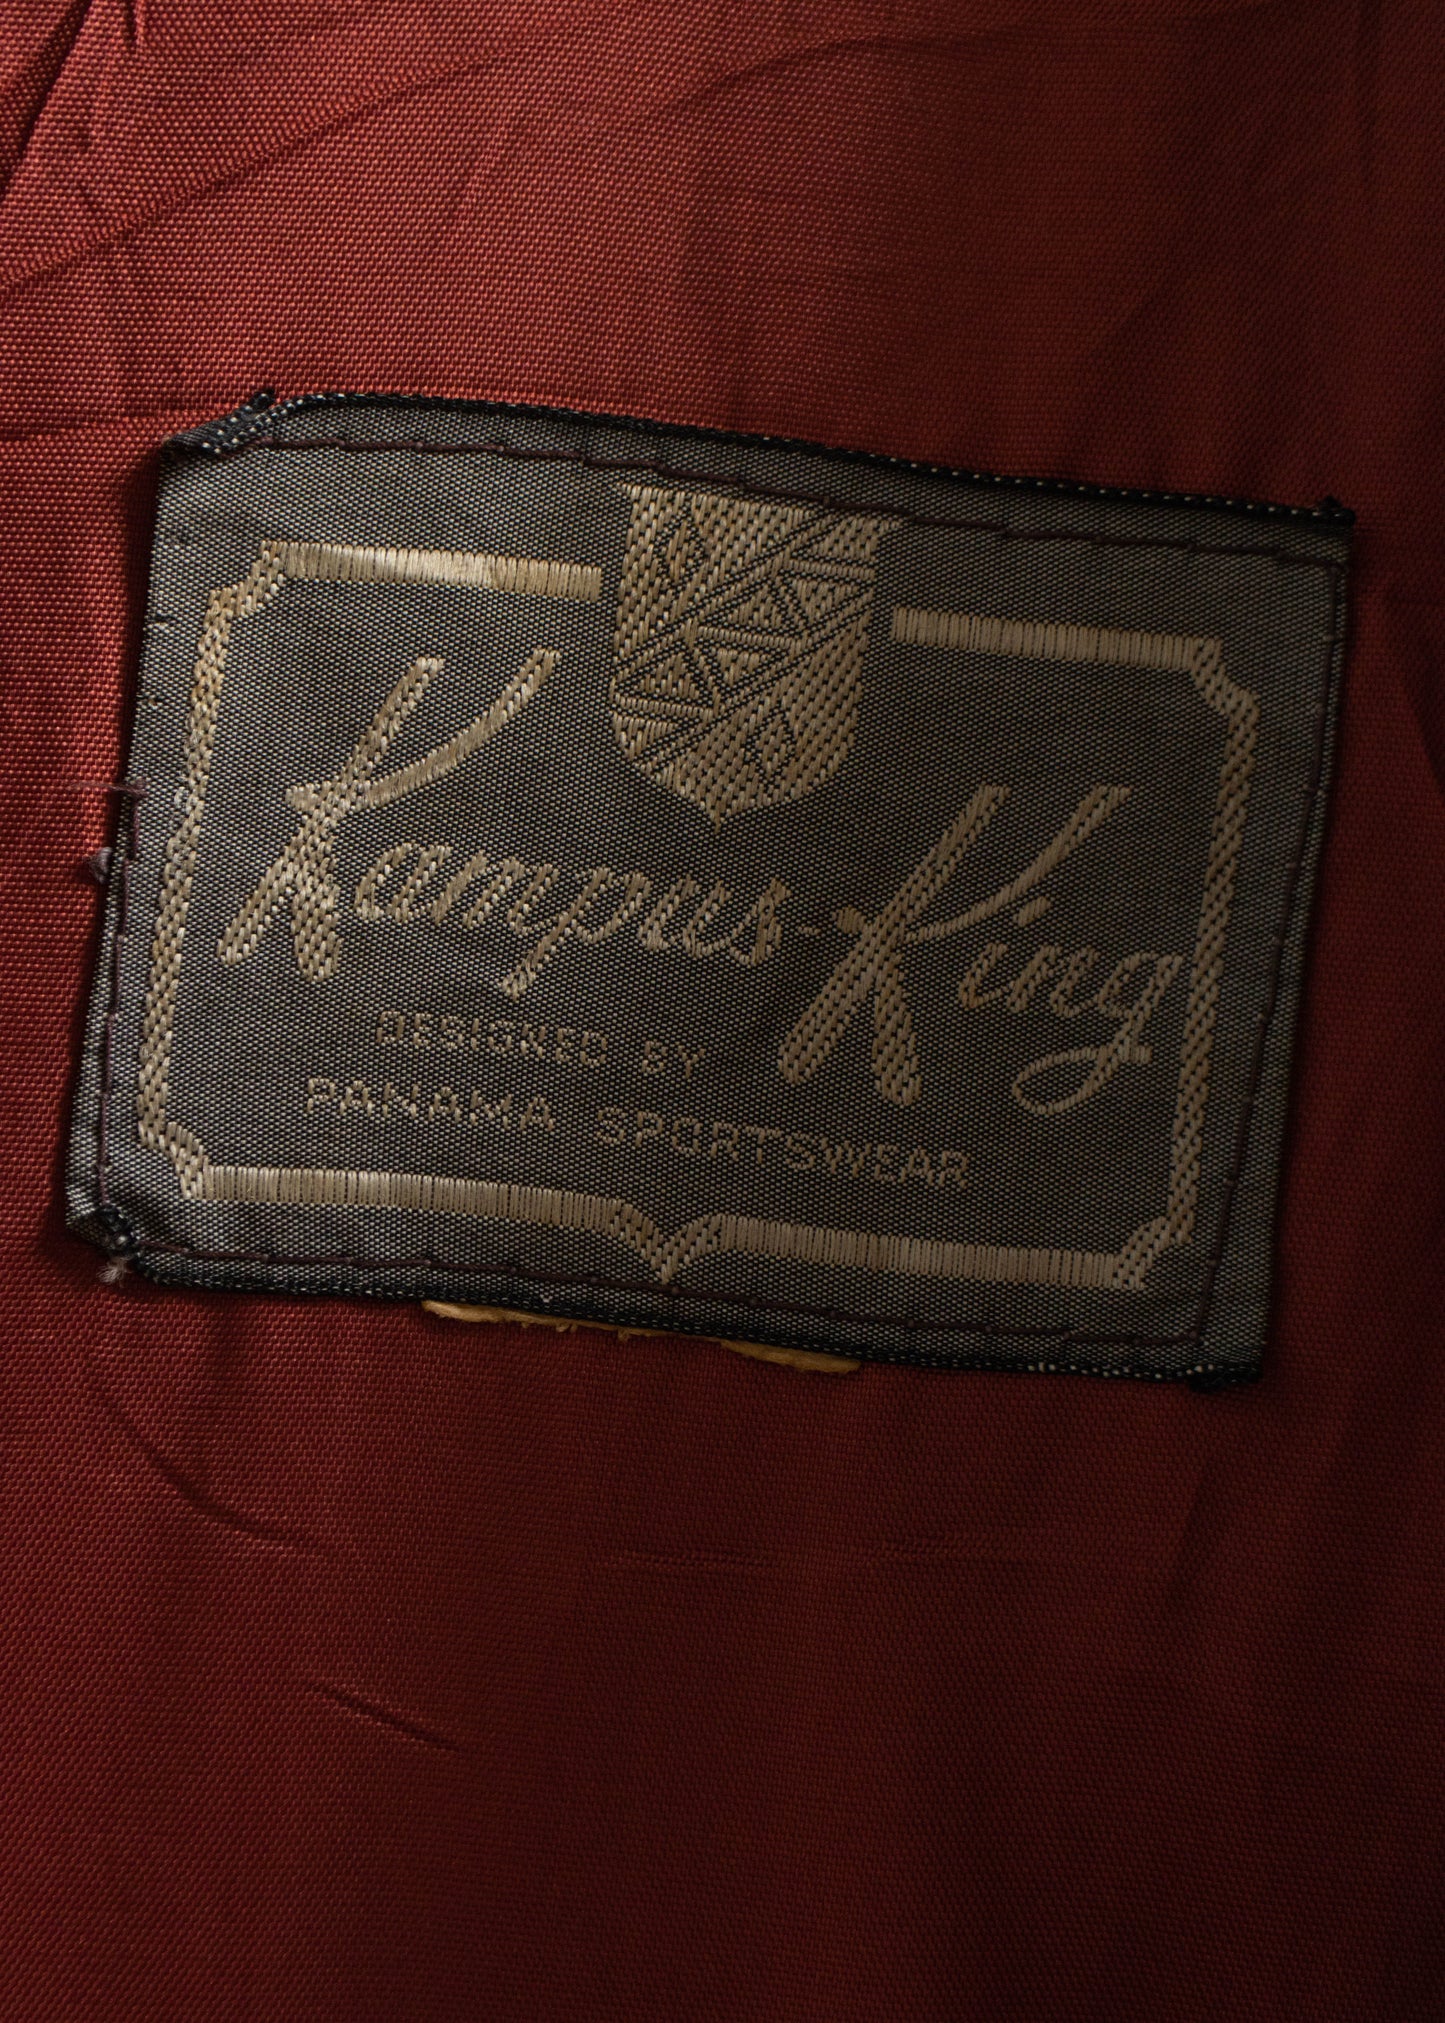 1970s Kampus-King Fringe Suede Jacket Size S/M